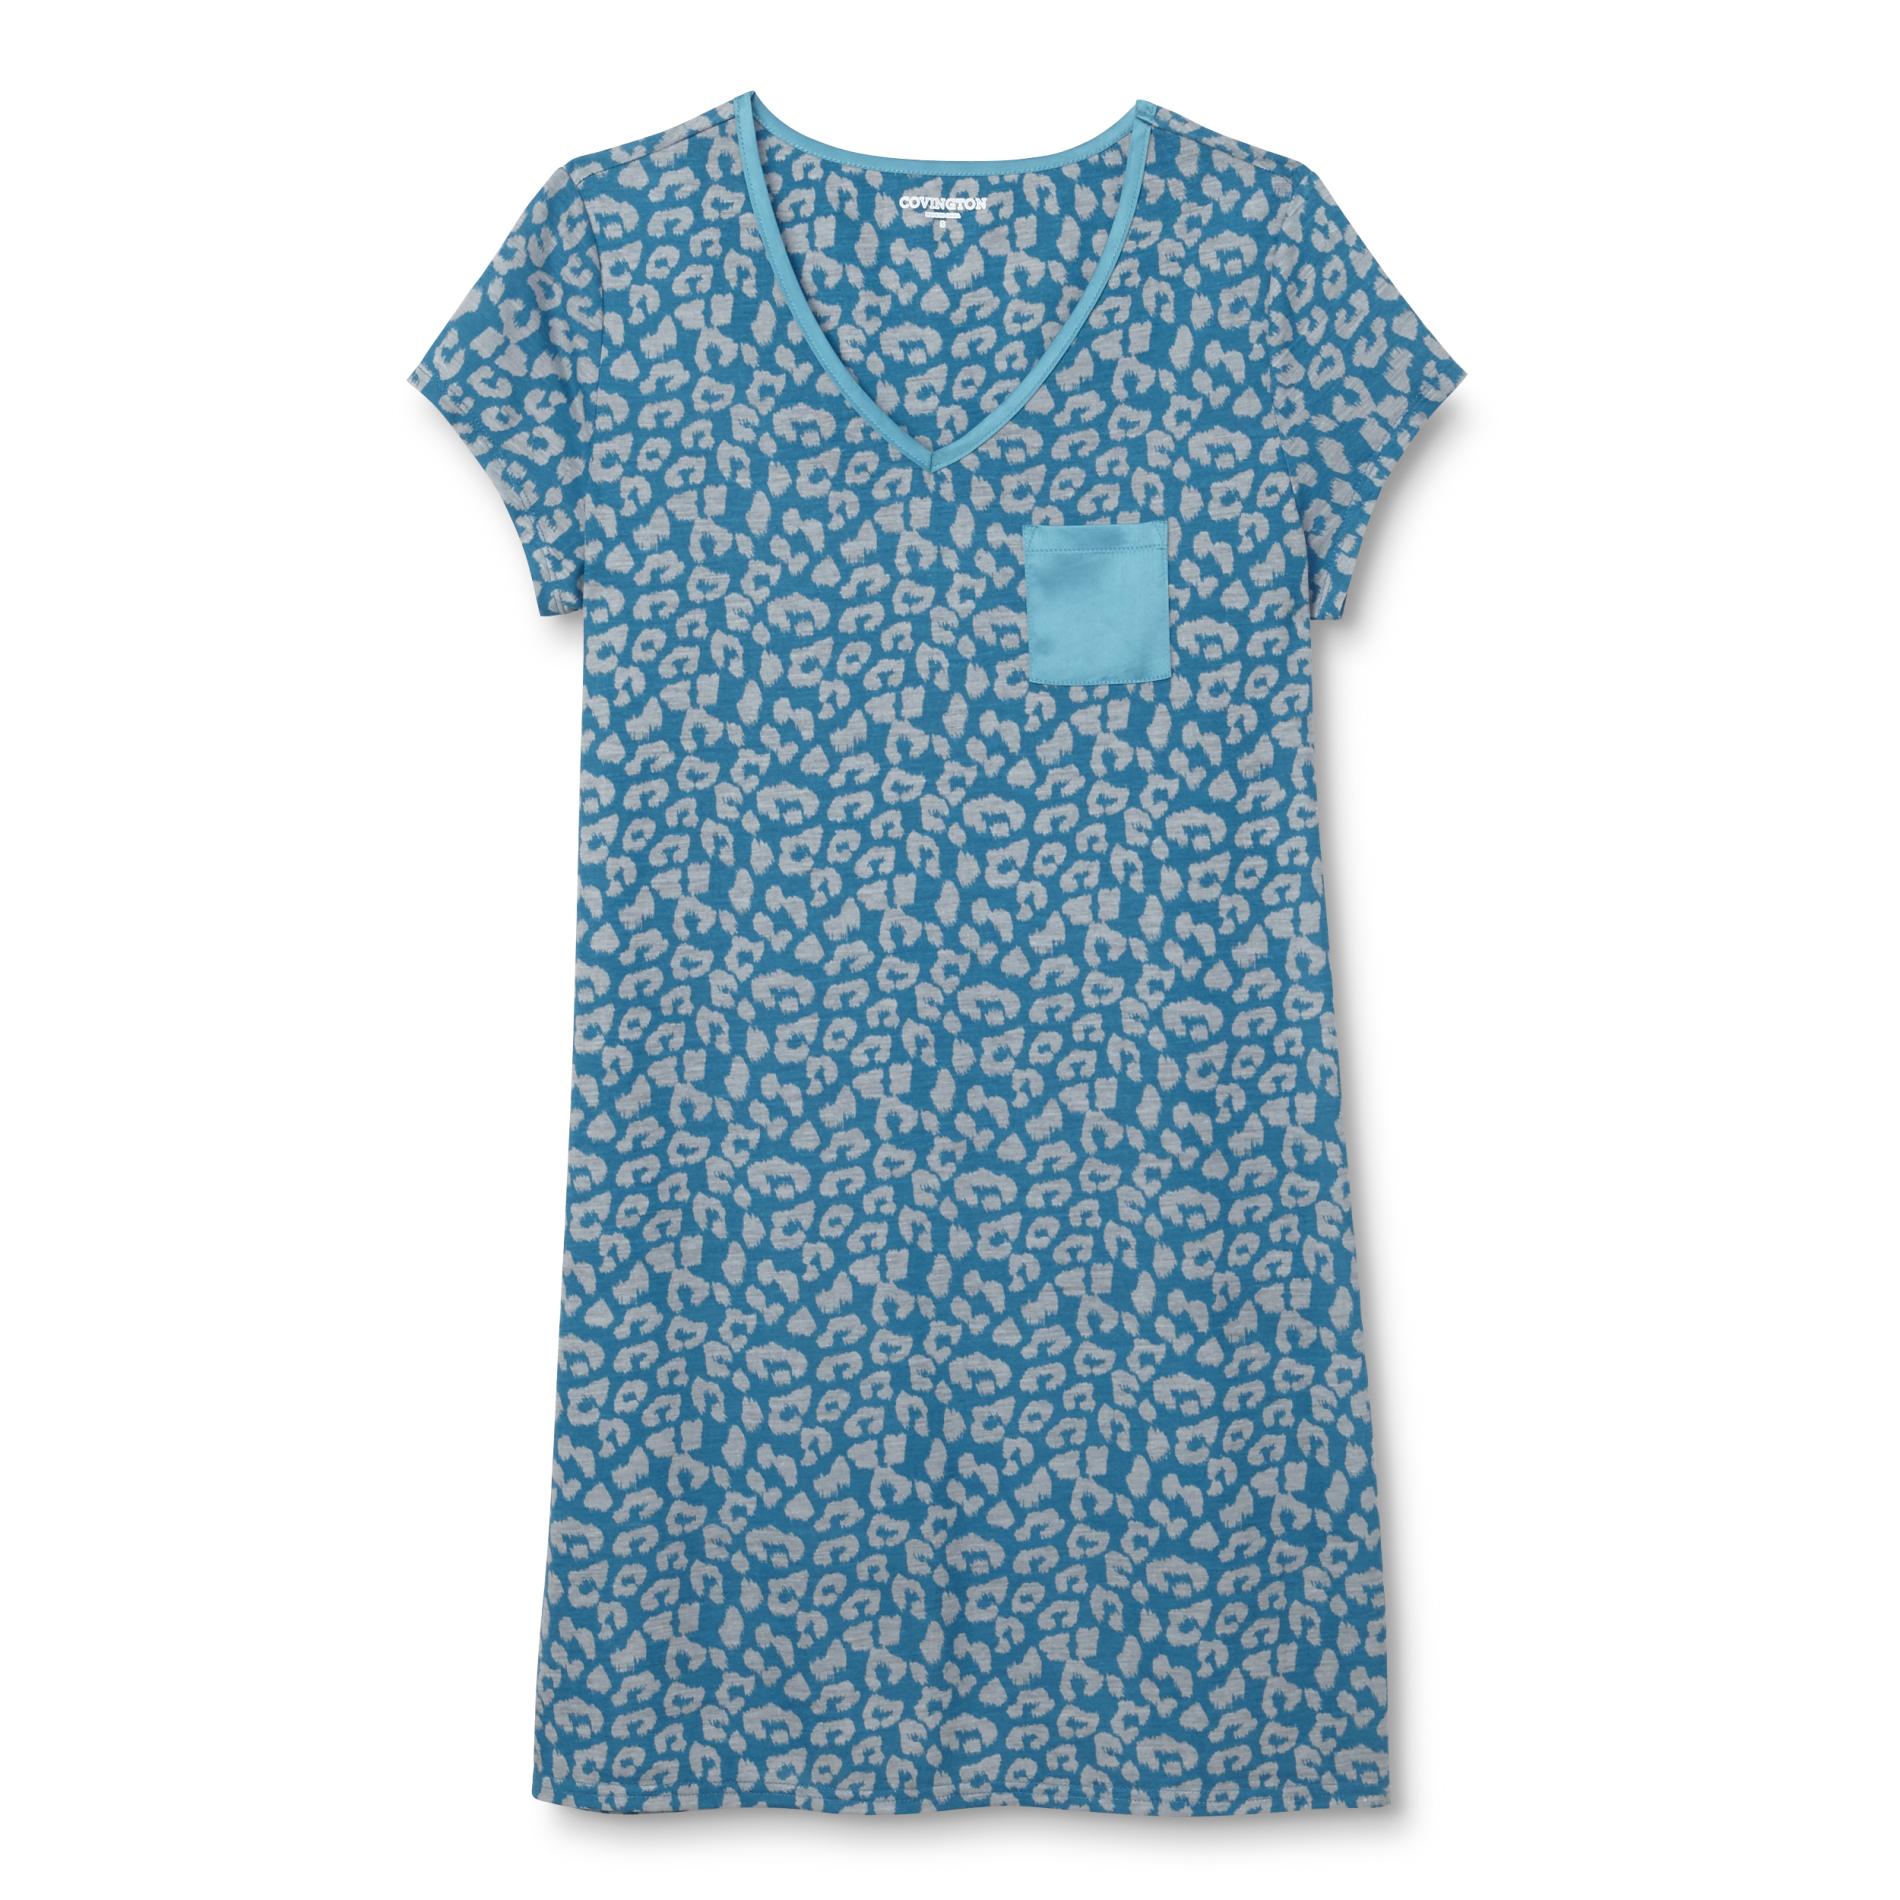 Covington Women's Sleep Shirt - Leopard Print